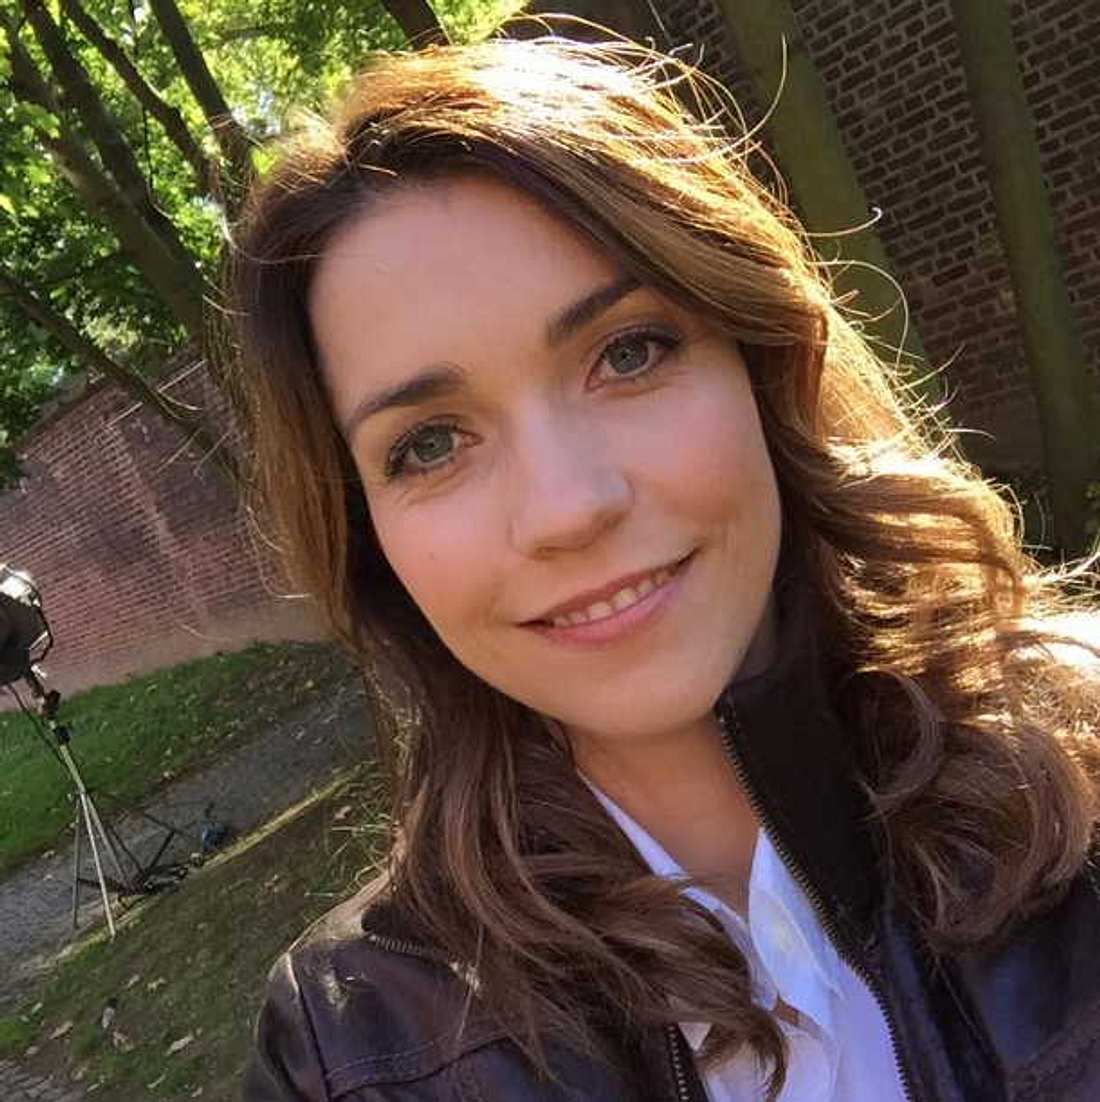 RTL-Moderatorin Annett Möller ist zum ersten Mal schwanger